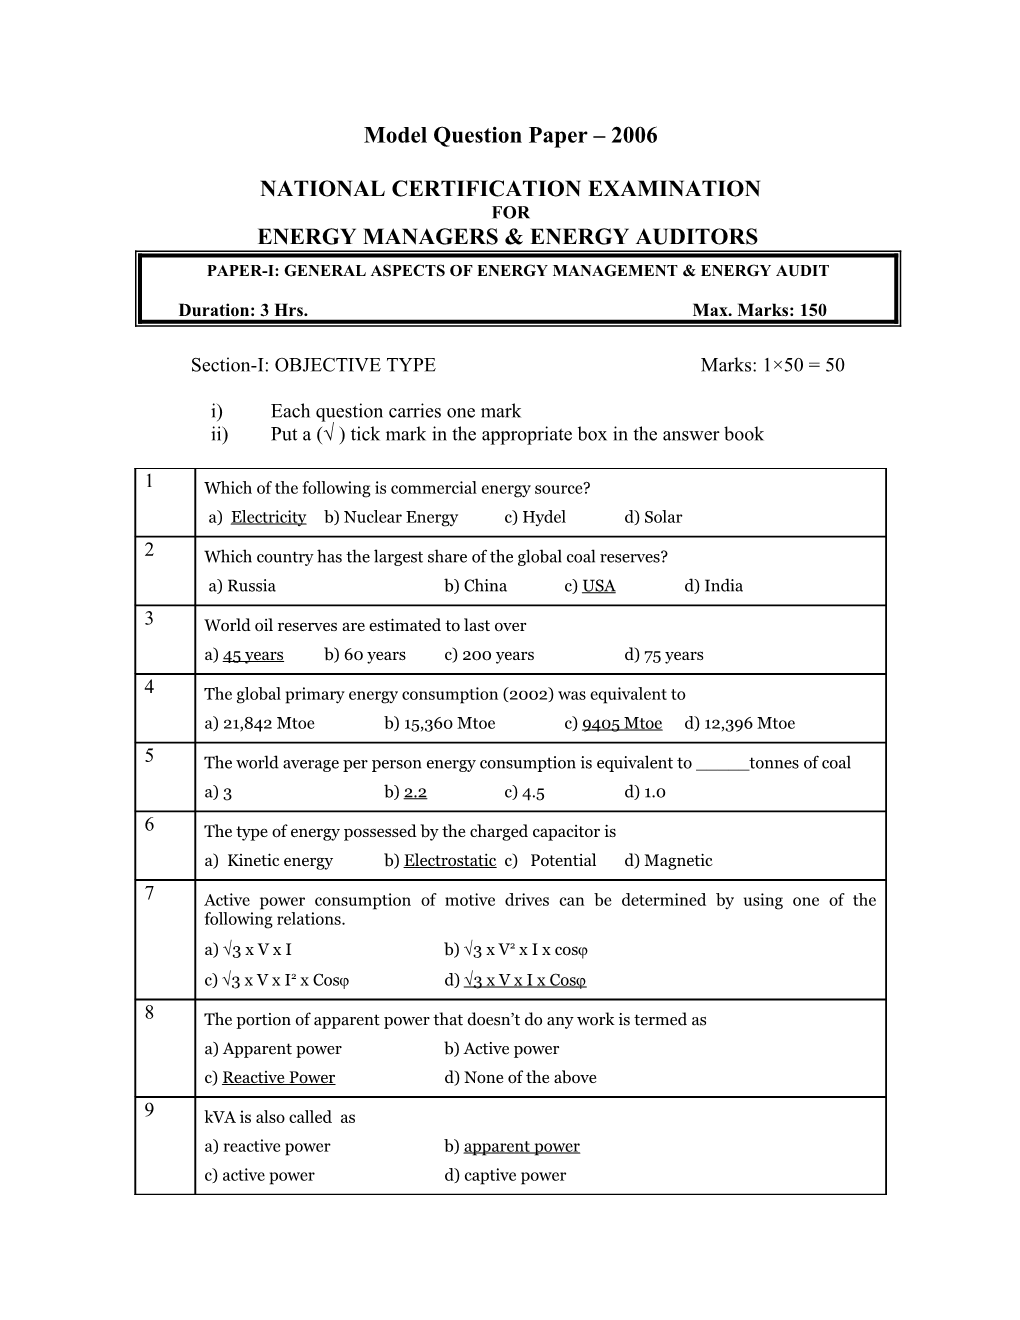 National Certification Examination